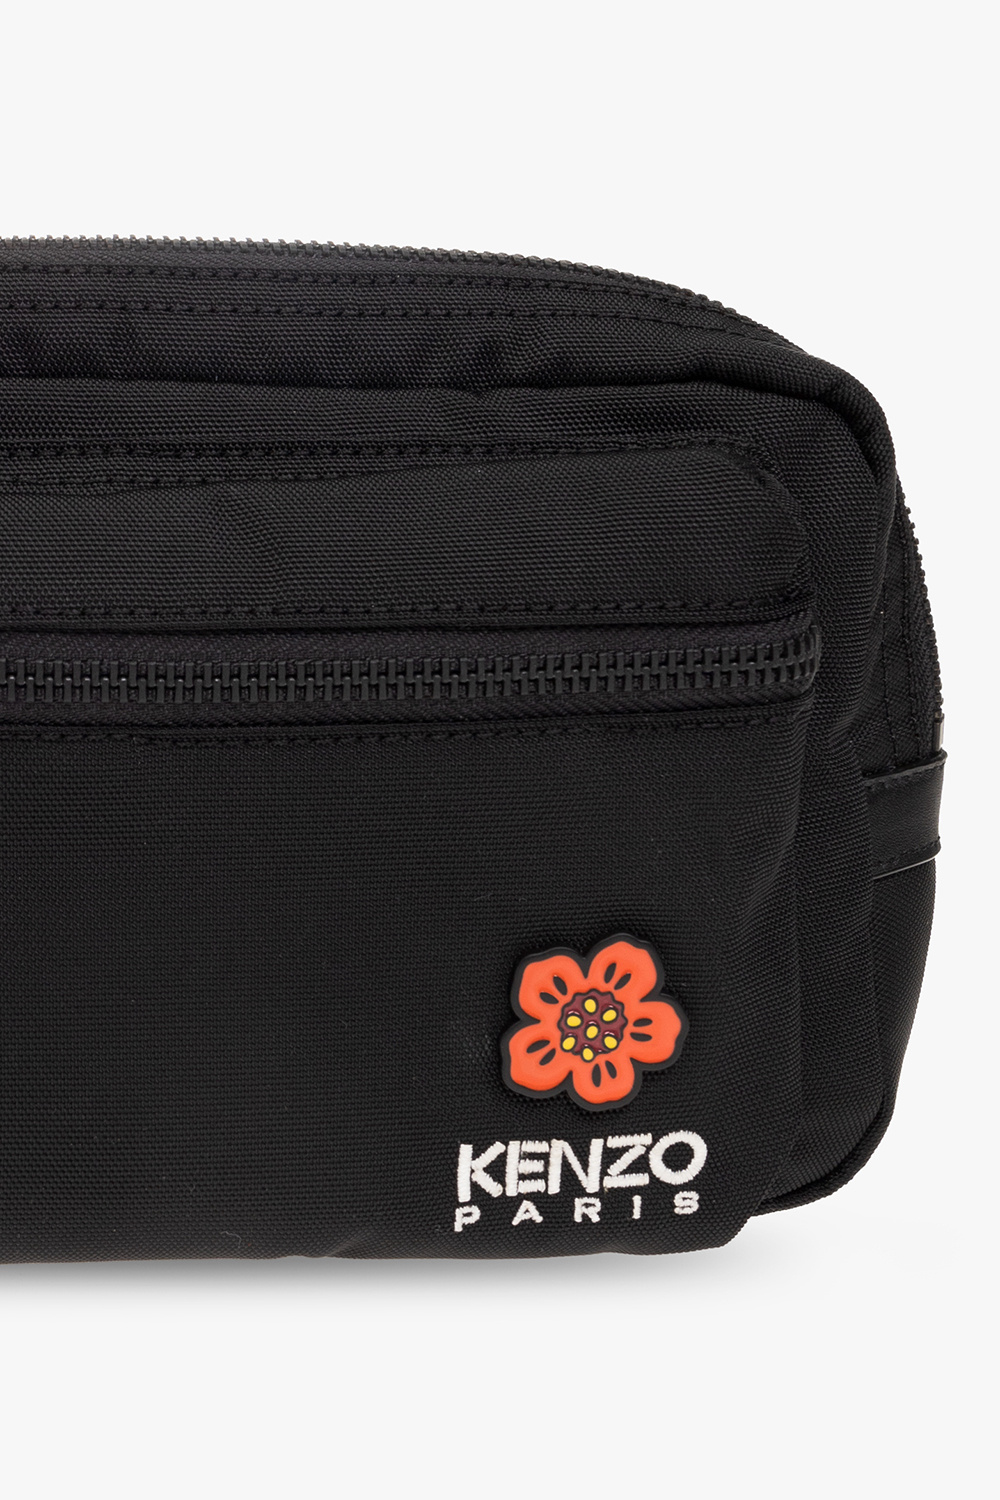 Kenzo Louis Vuitton 2000 pre-owned Eanne PM crossbody bag